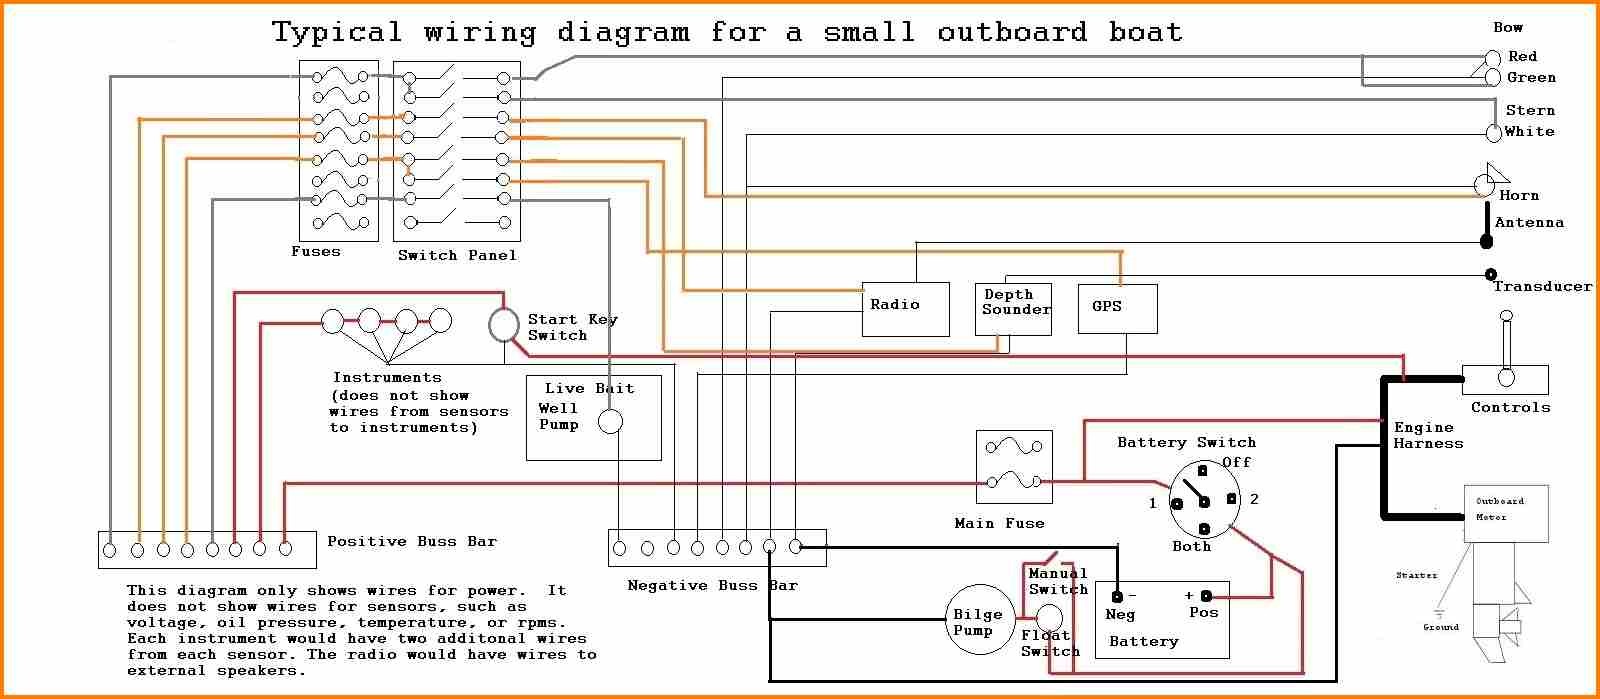 12v Switch Panel Wiring Diagram 5a23e E9b 910—1024 In 12v Wiring 6 Gang